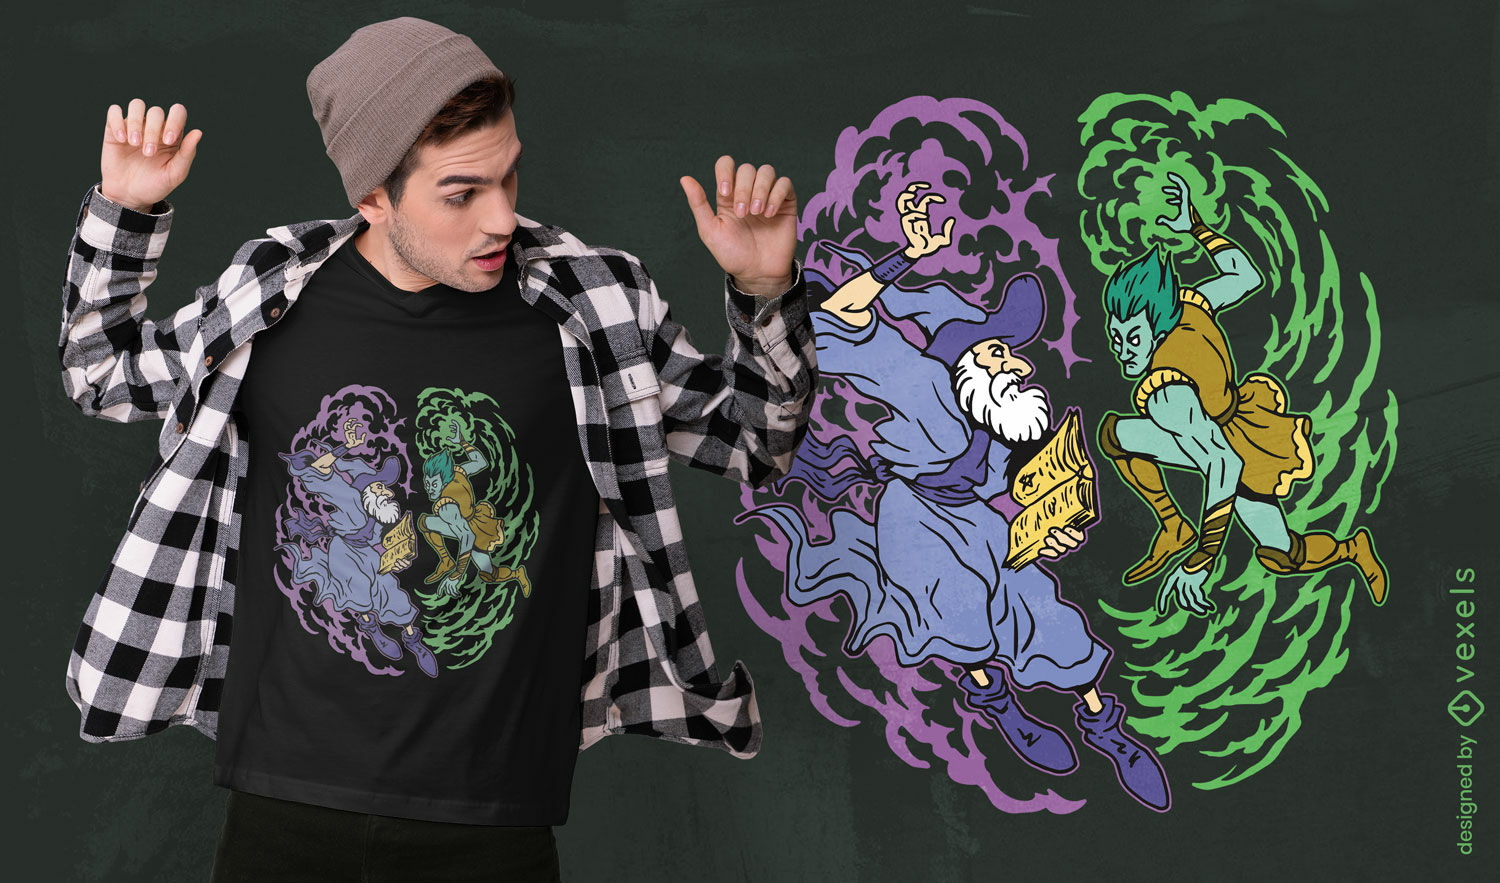 Zauberer und Zauberer k?mpfen T-Shirt-Design